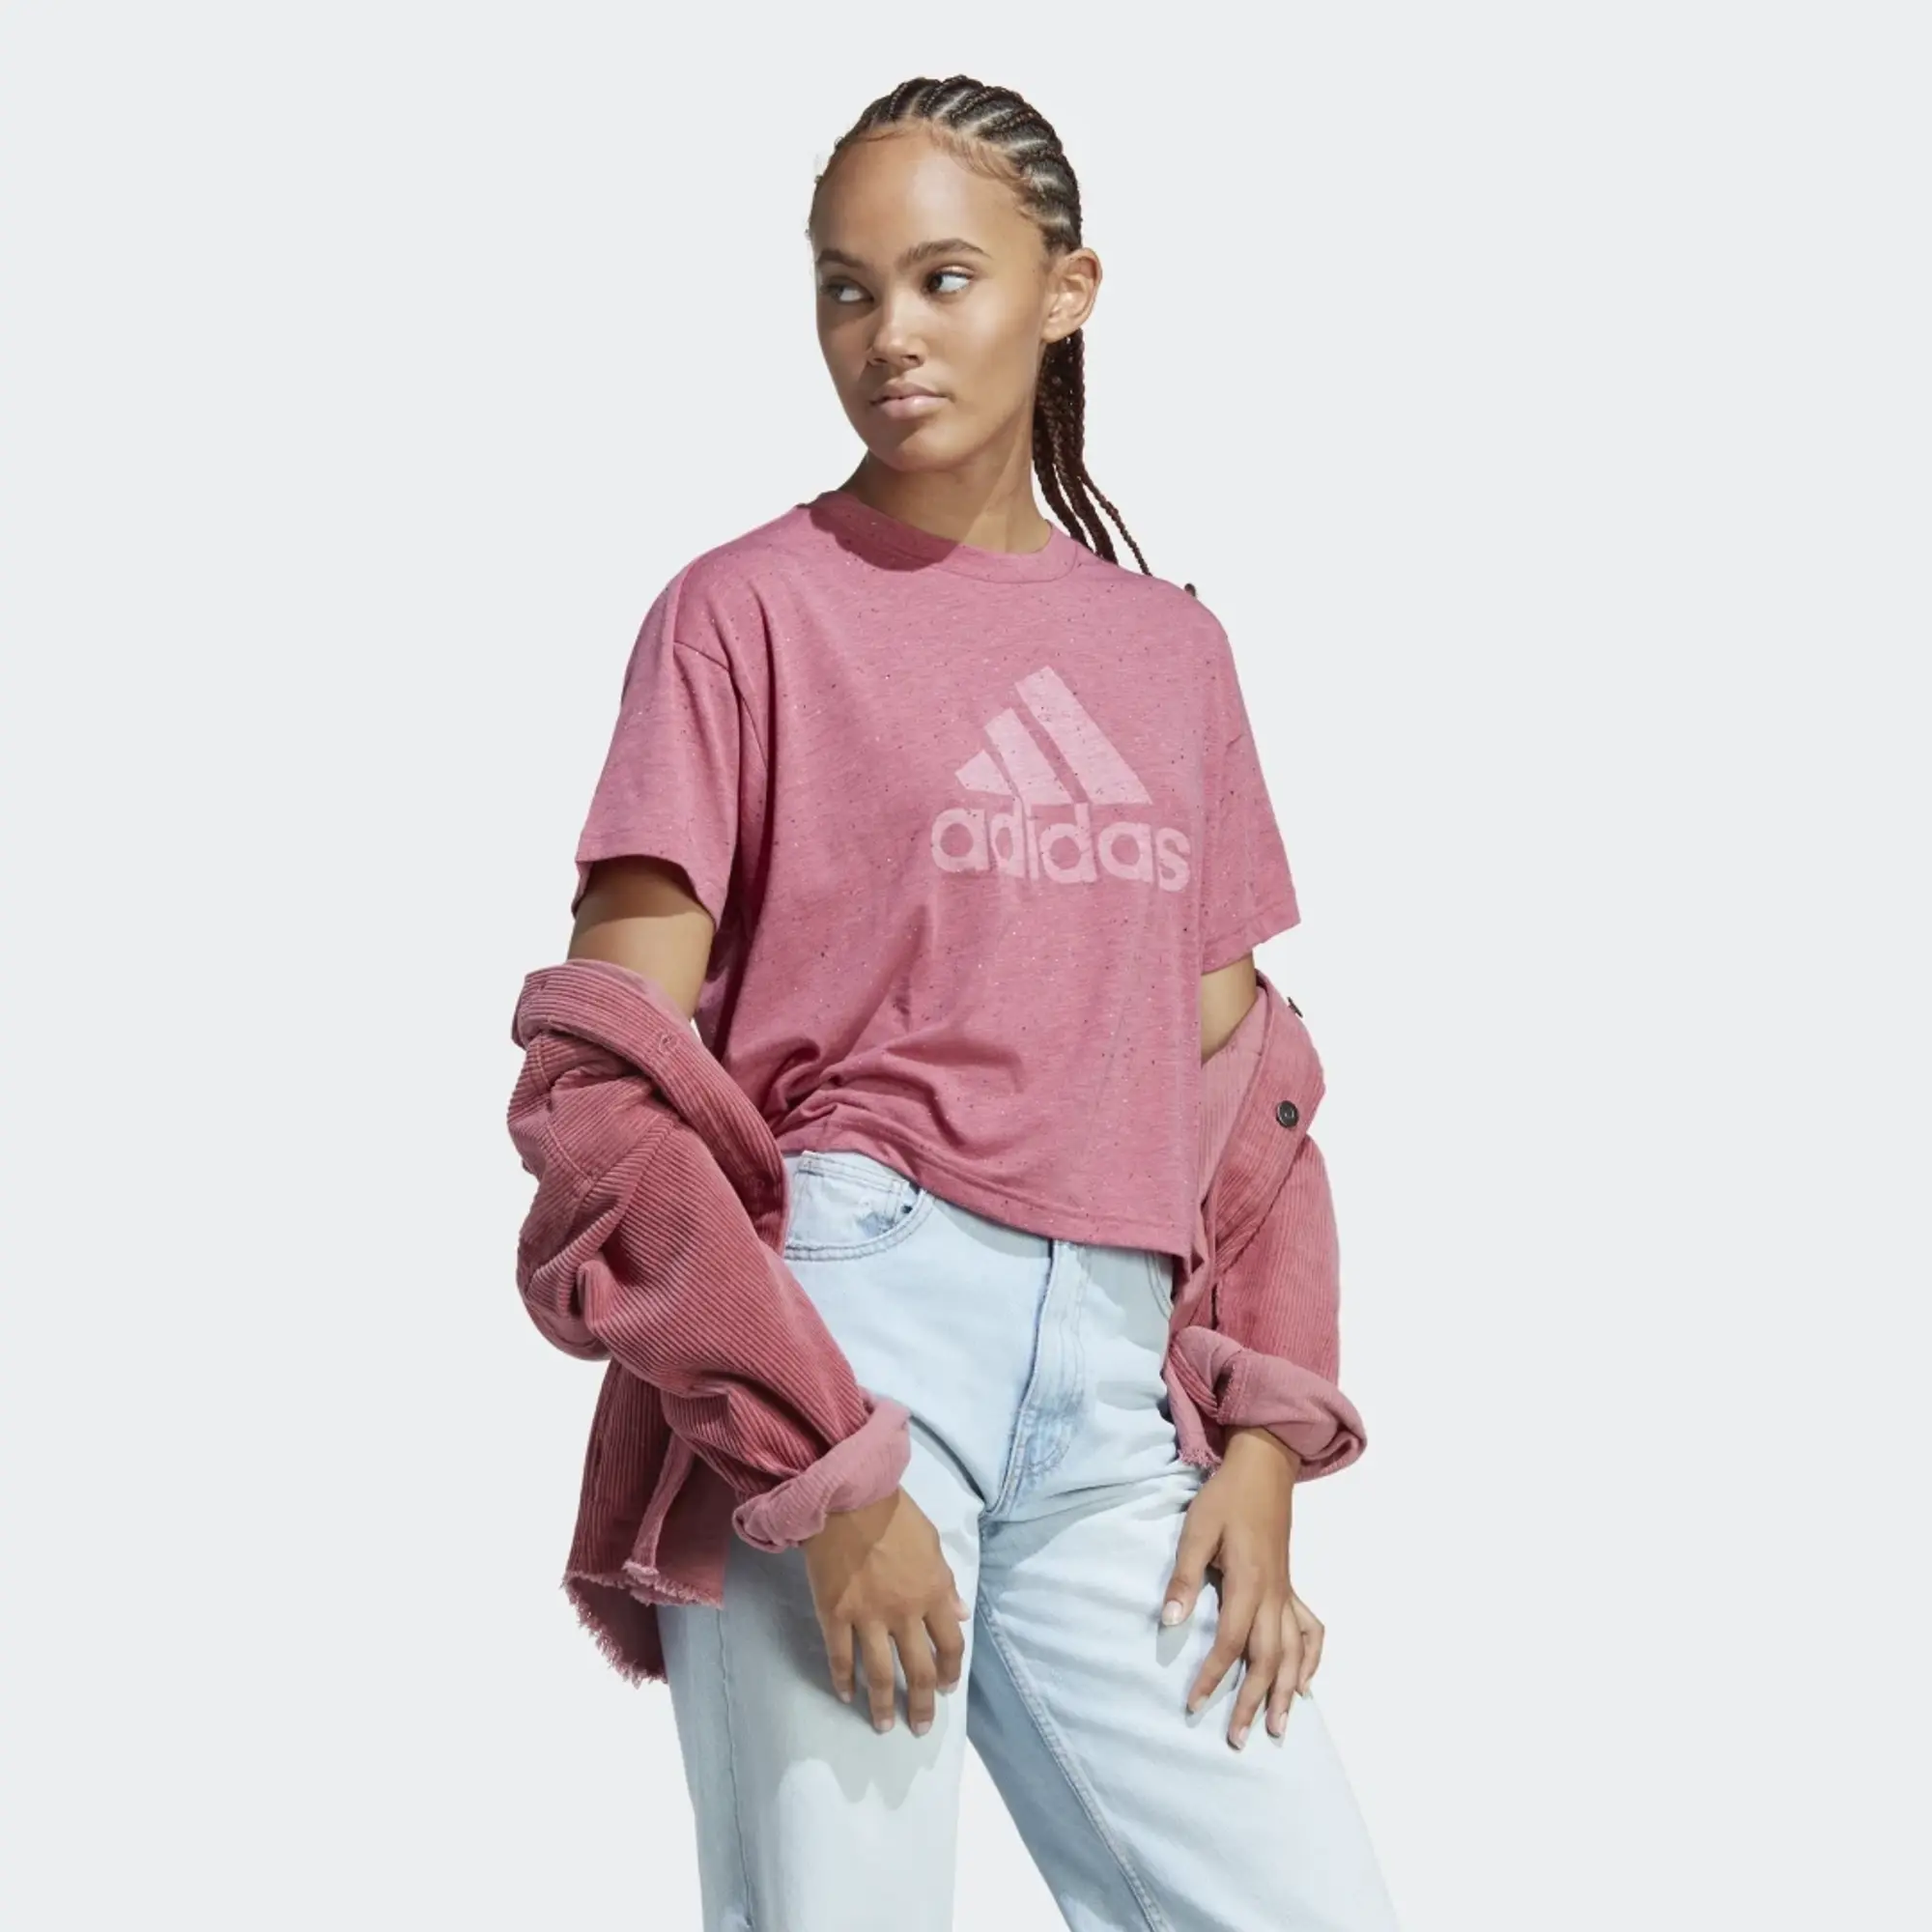 - White | Strata IC0493 Mel. Icons adidas Winners Future Pink / T-Shirt